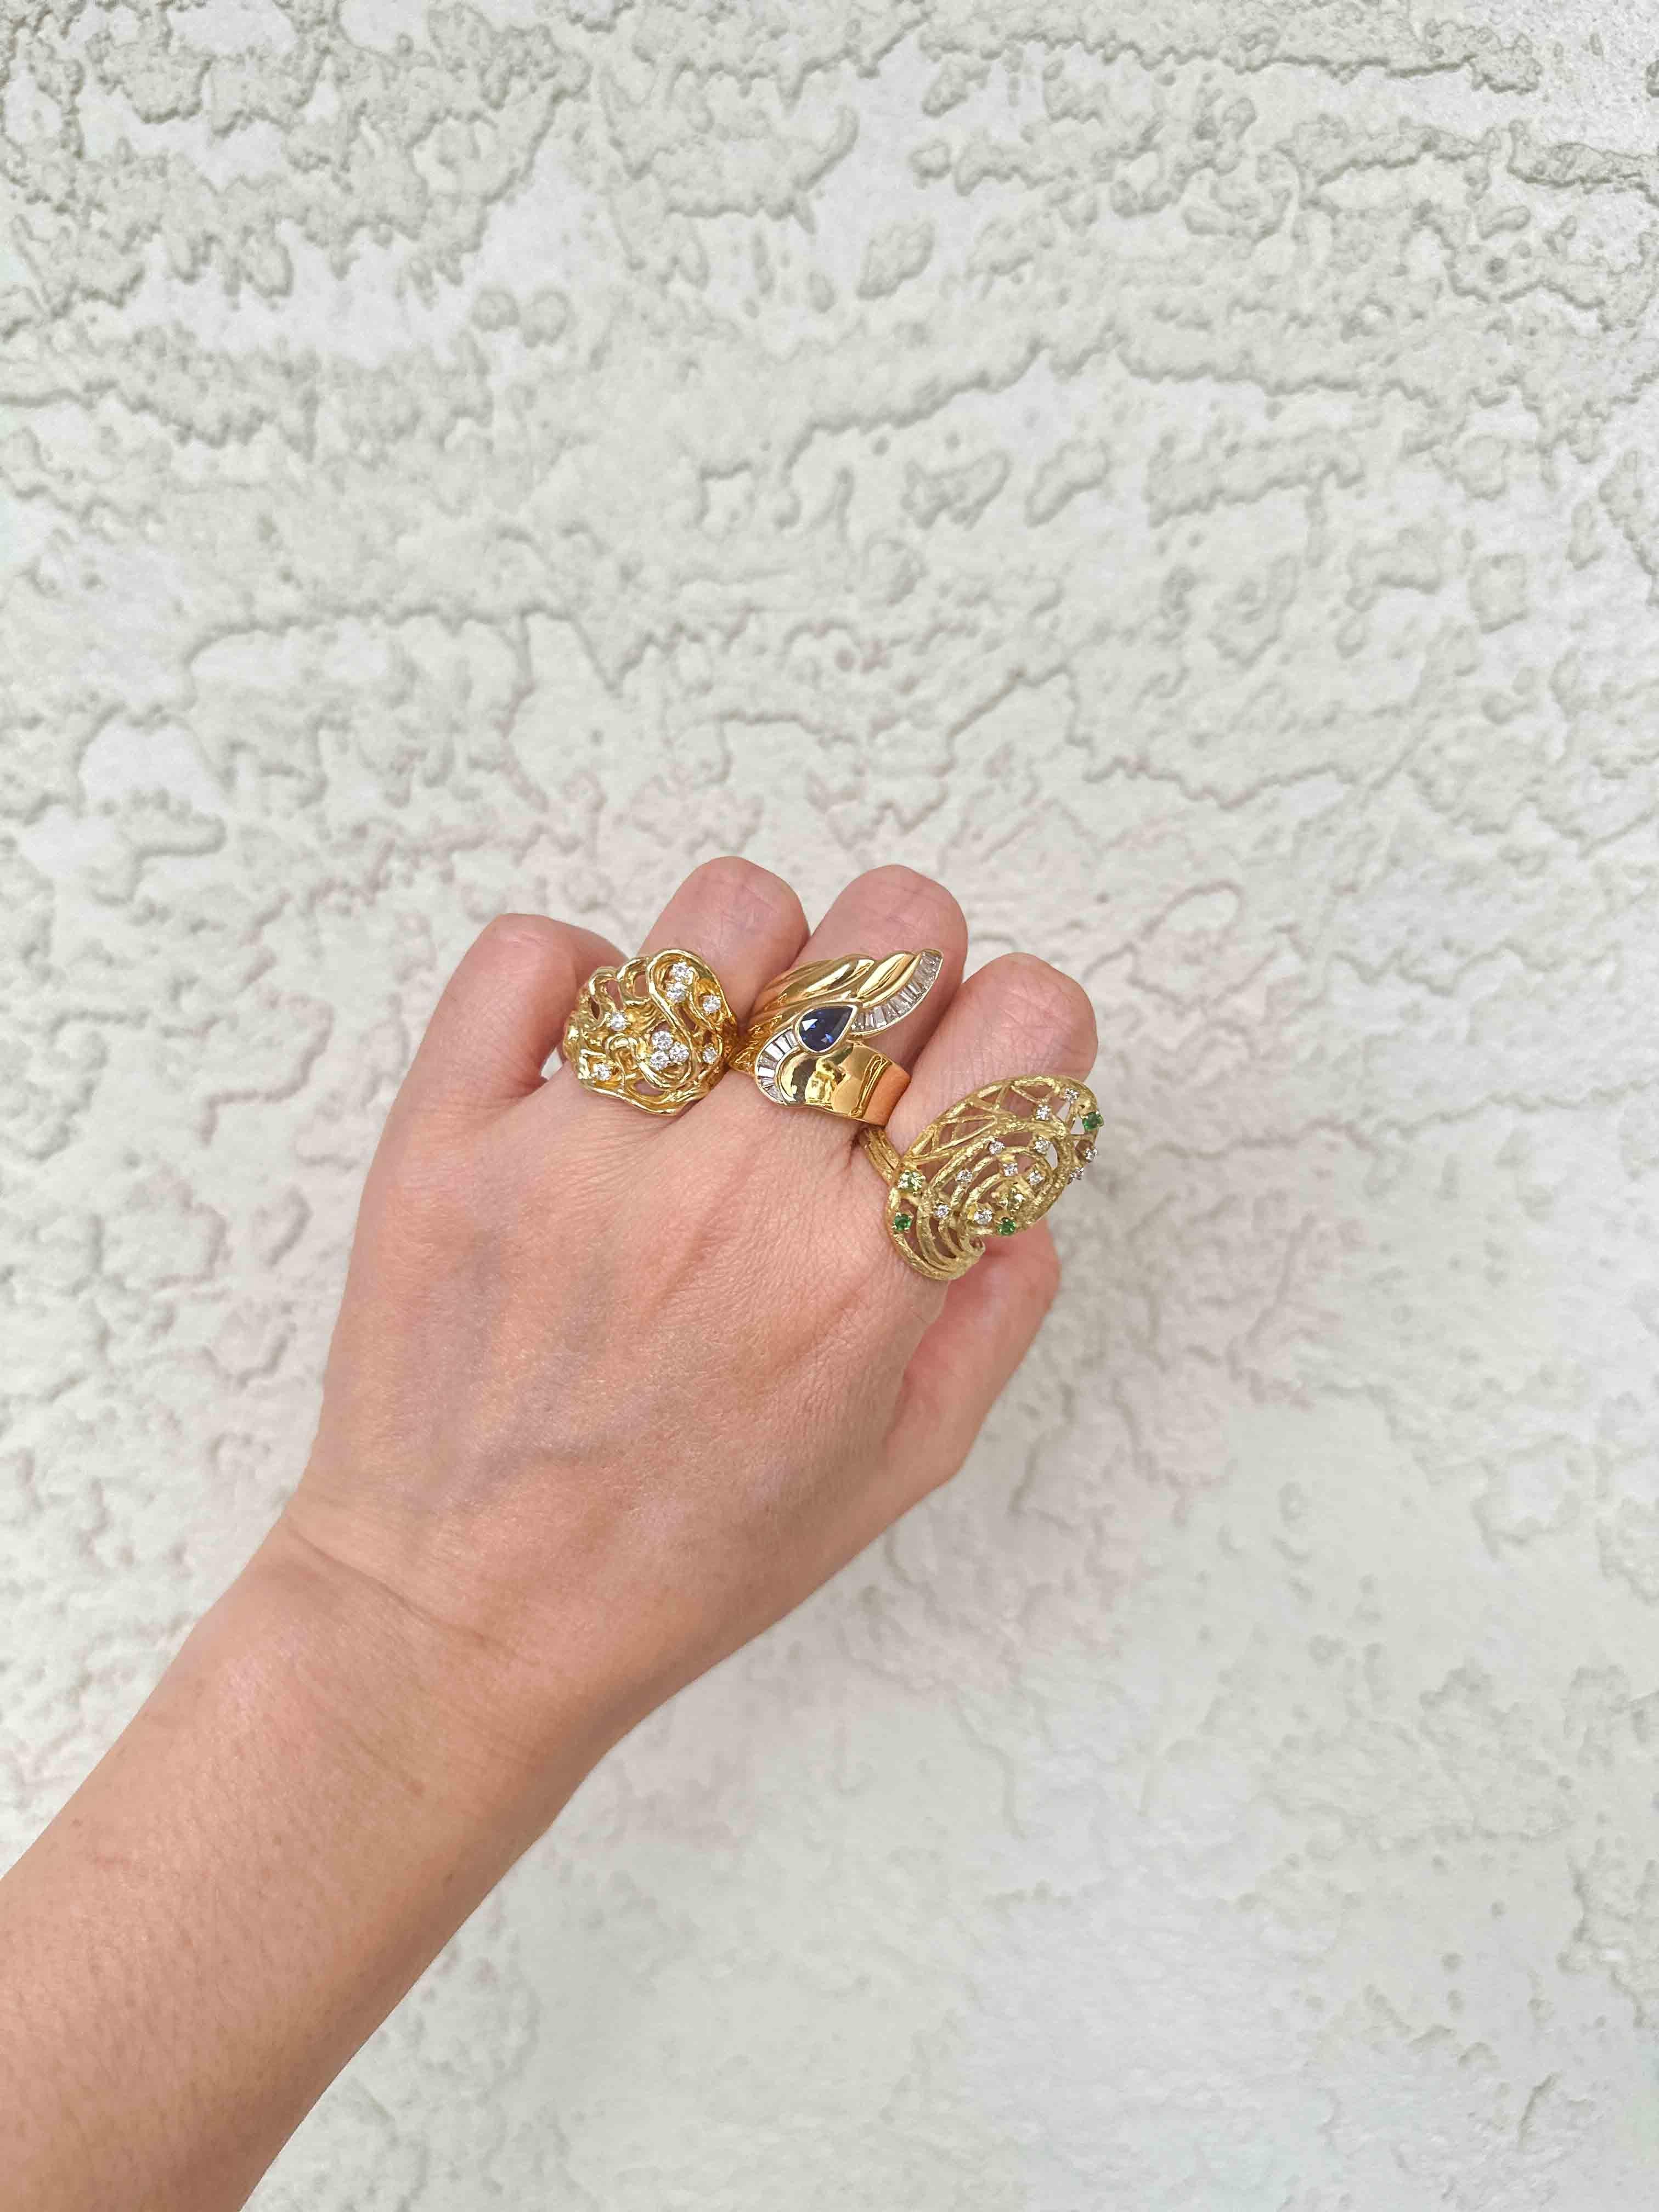 Elongated Modernist Ring with Diamond and Tsavorite 18K Gold 9g V1121 For Sale 4